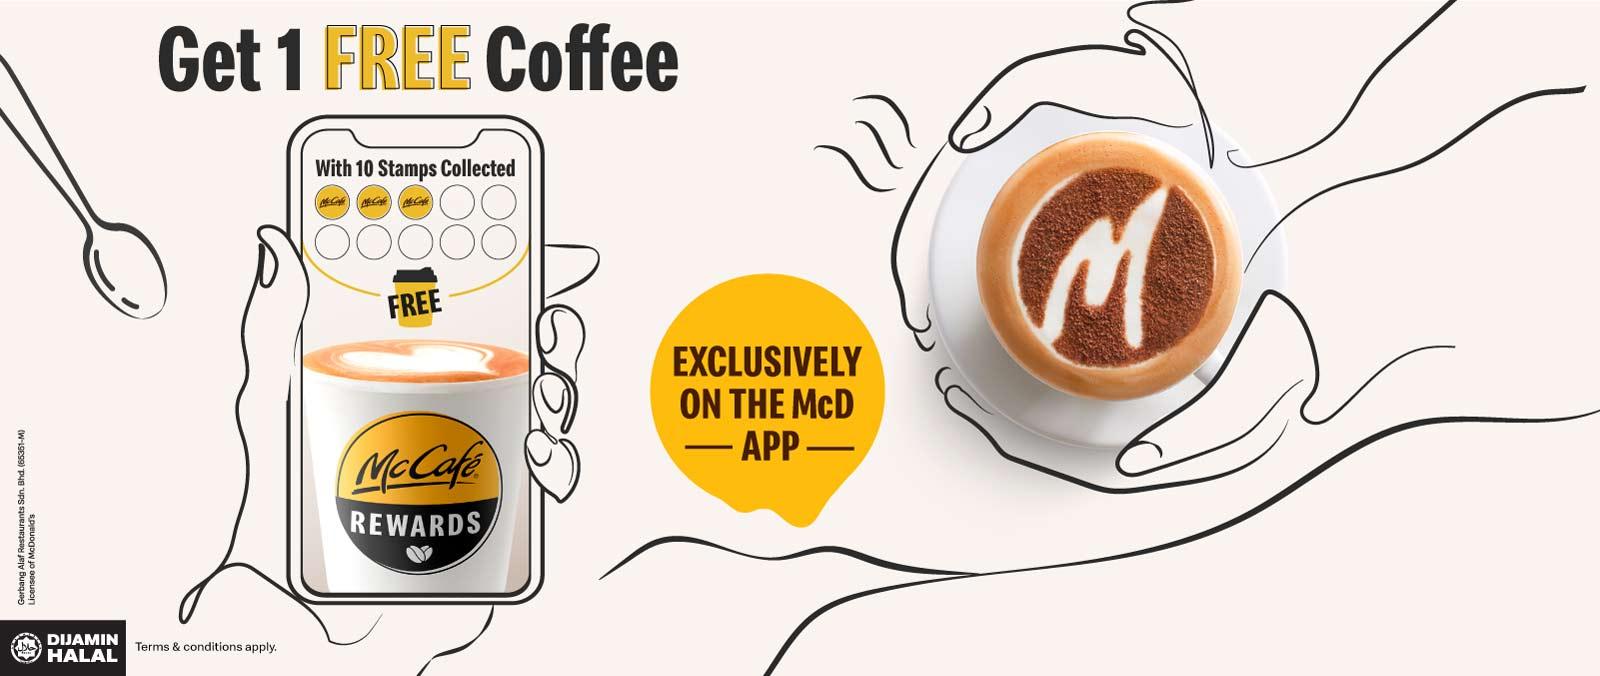 mcdonald-s-malaysia-mccaf-rewards-with-mcd-app